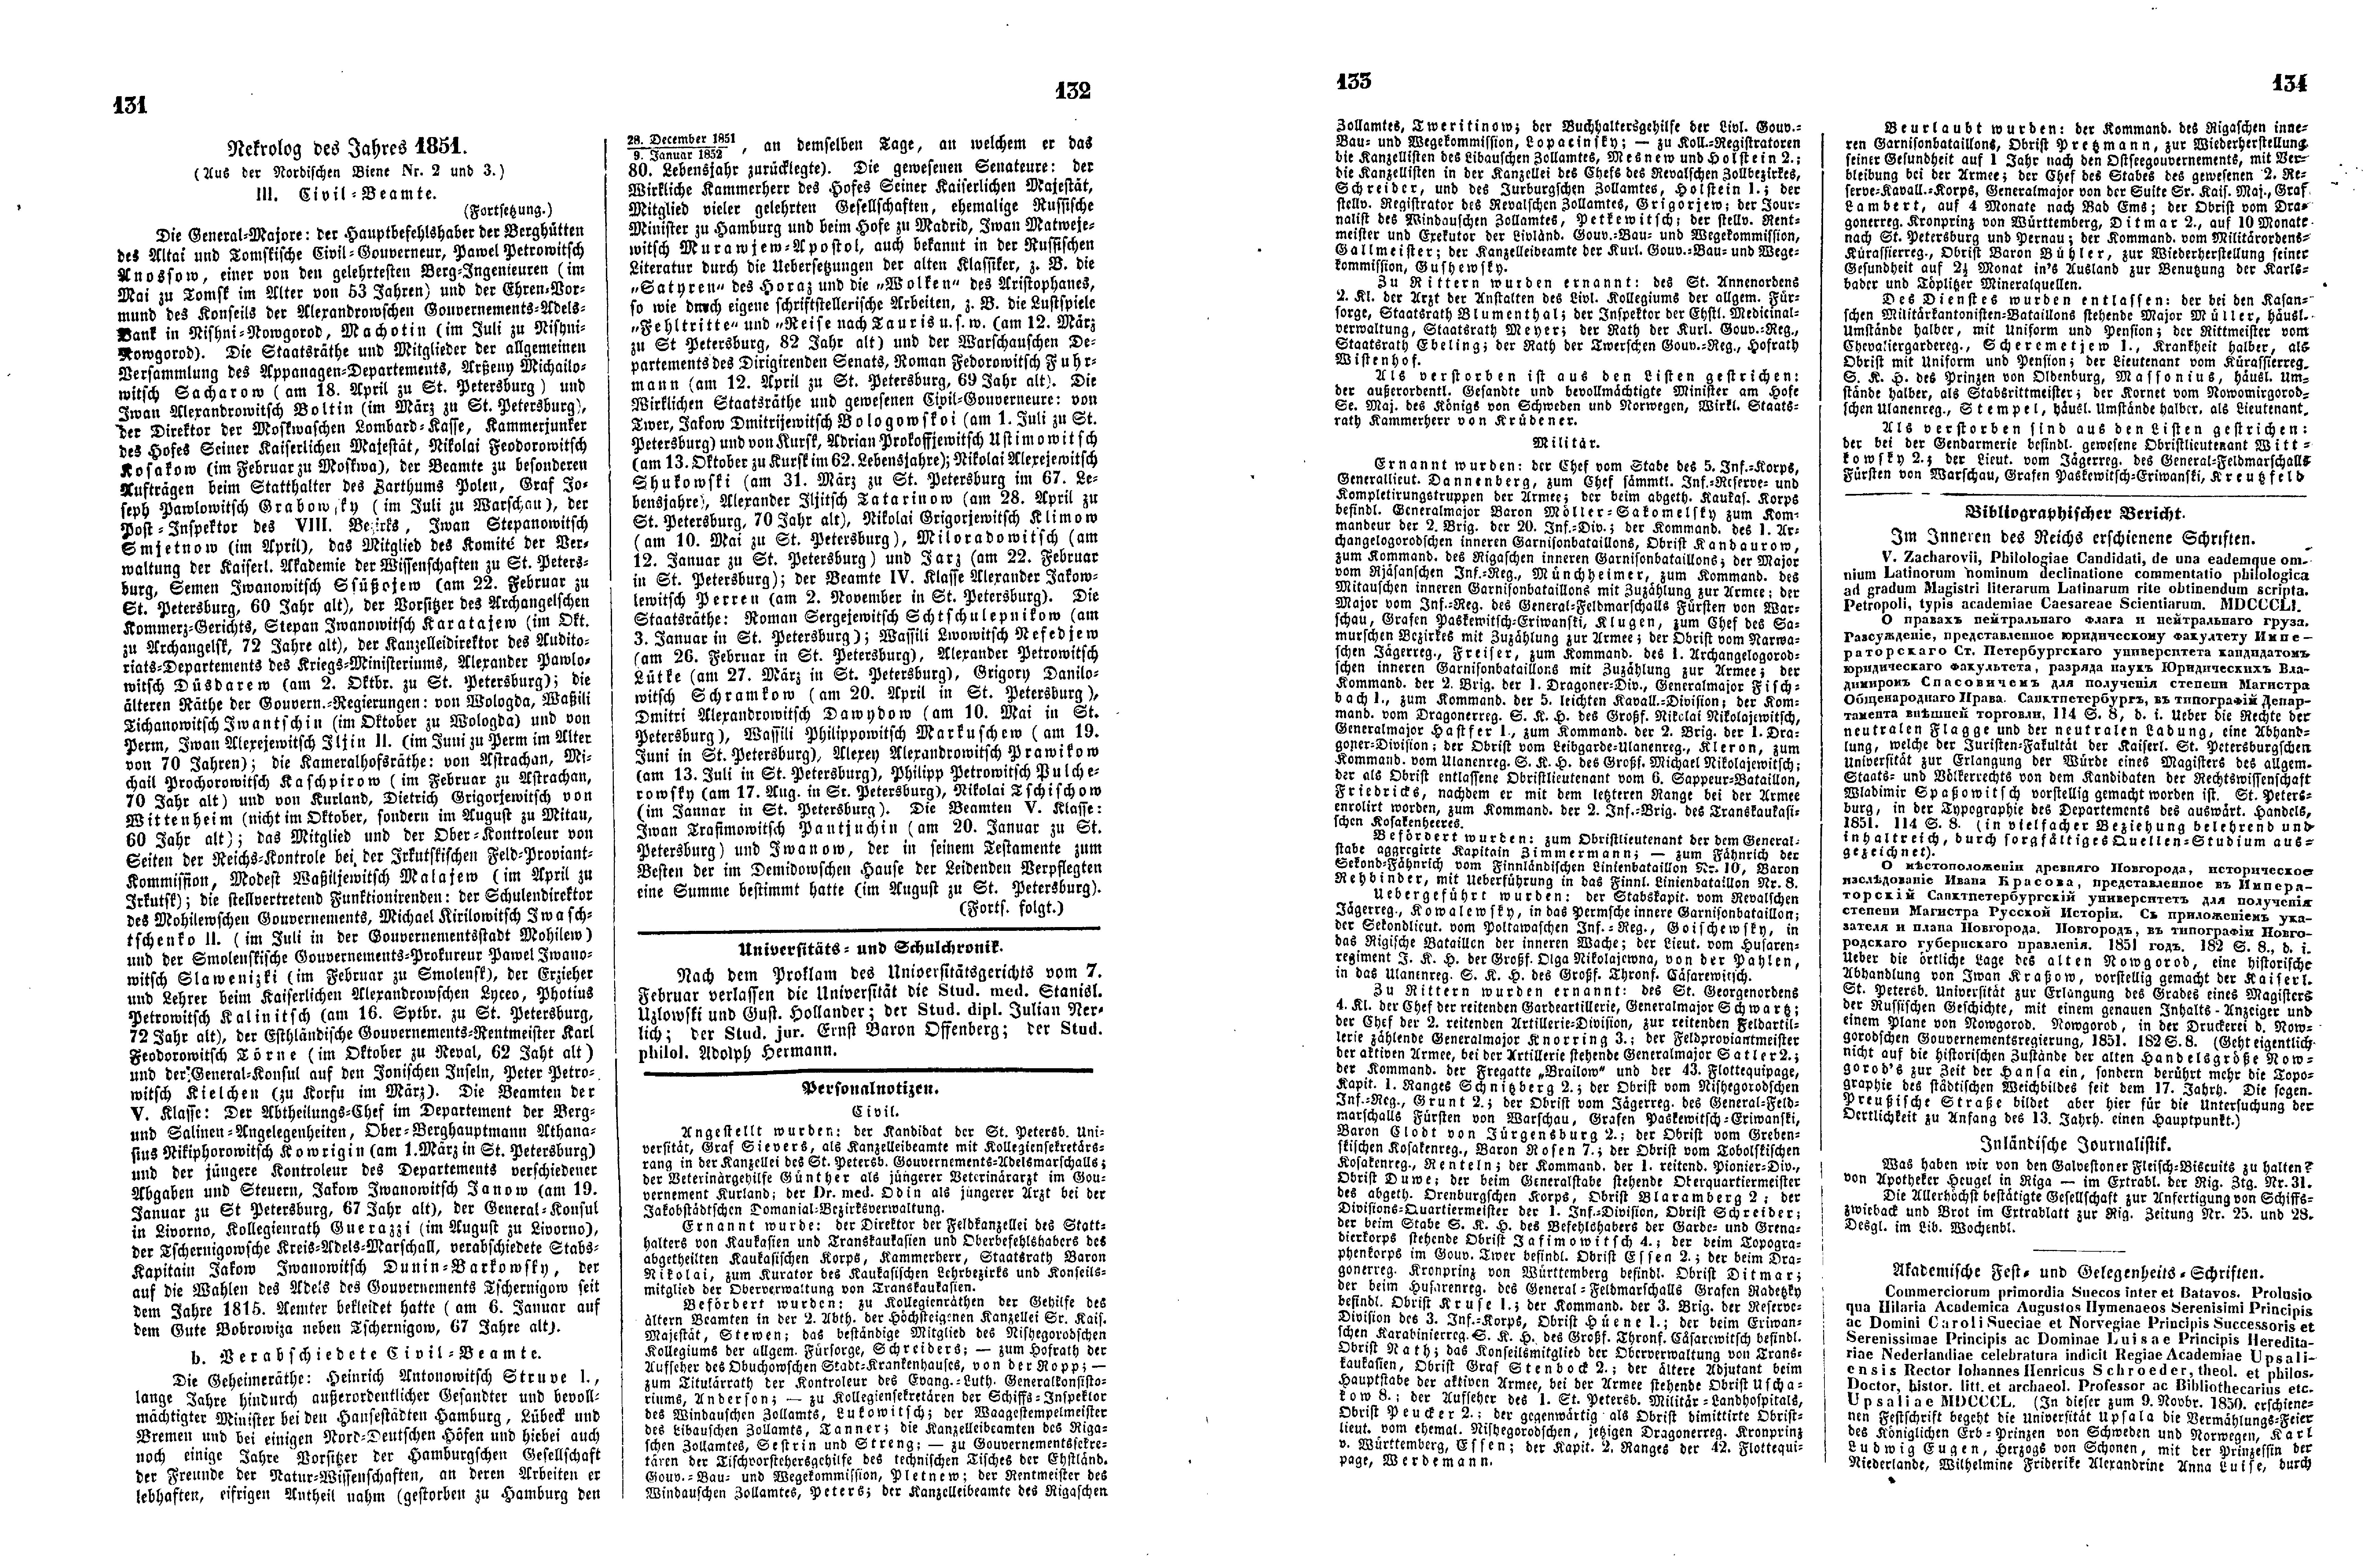 Das Inland [17] (1852) | 37. (131-134) Main body of text